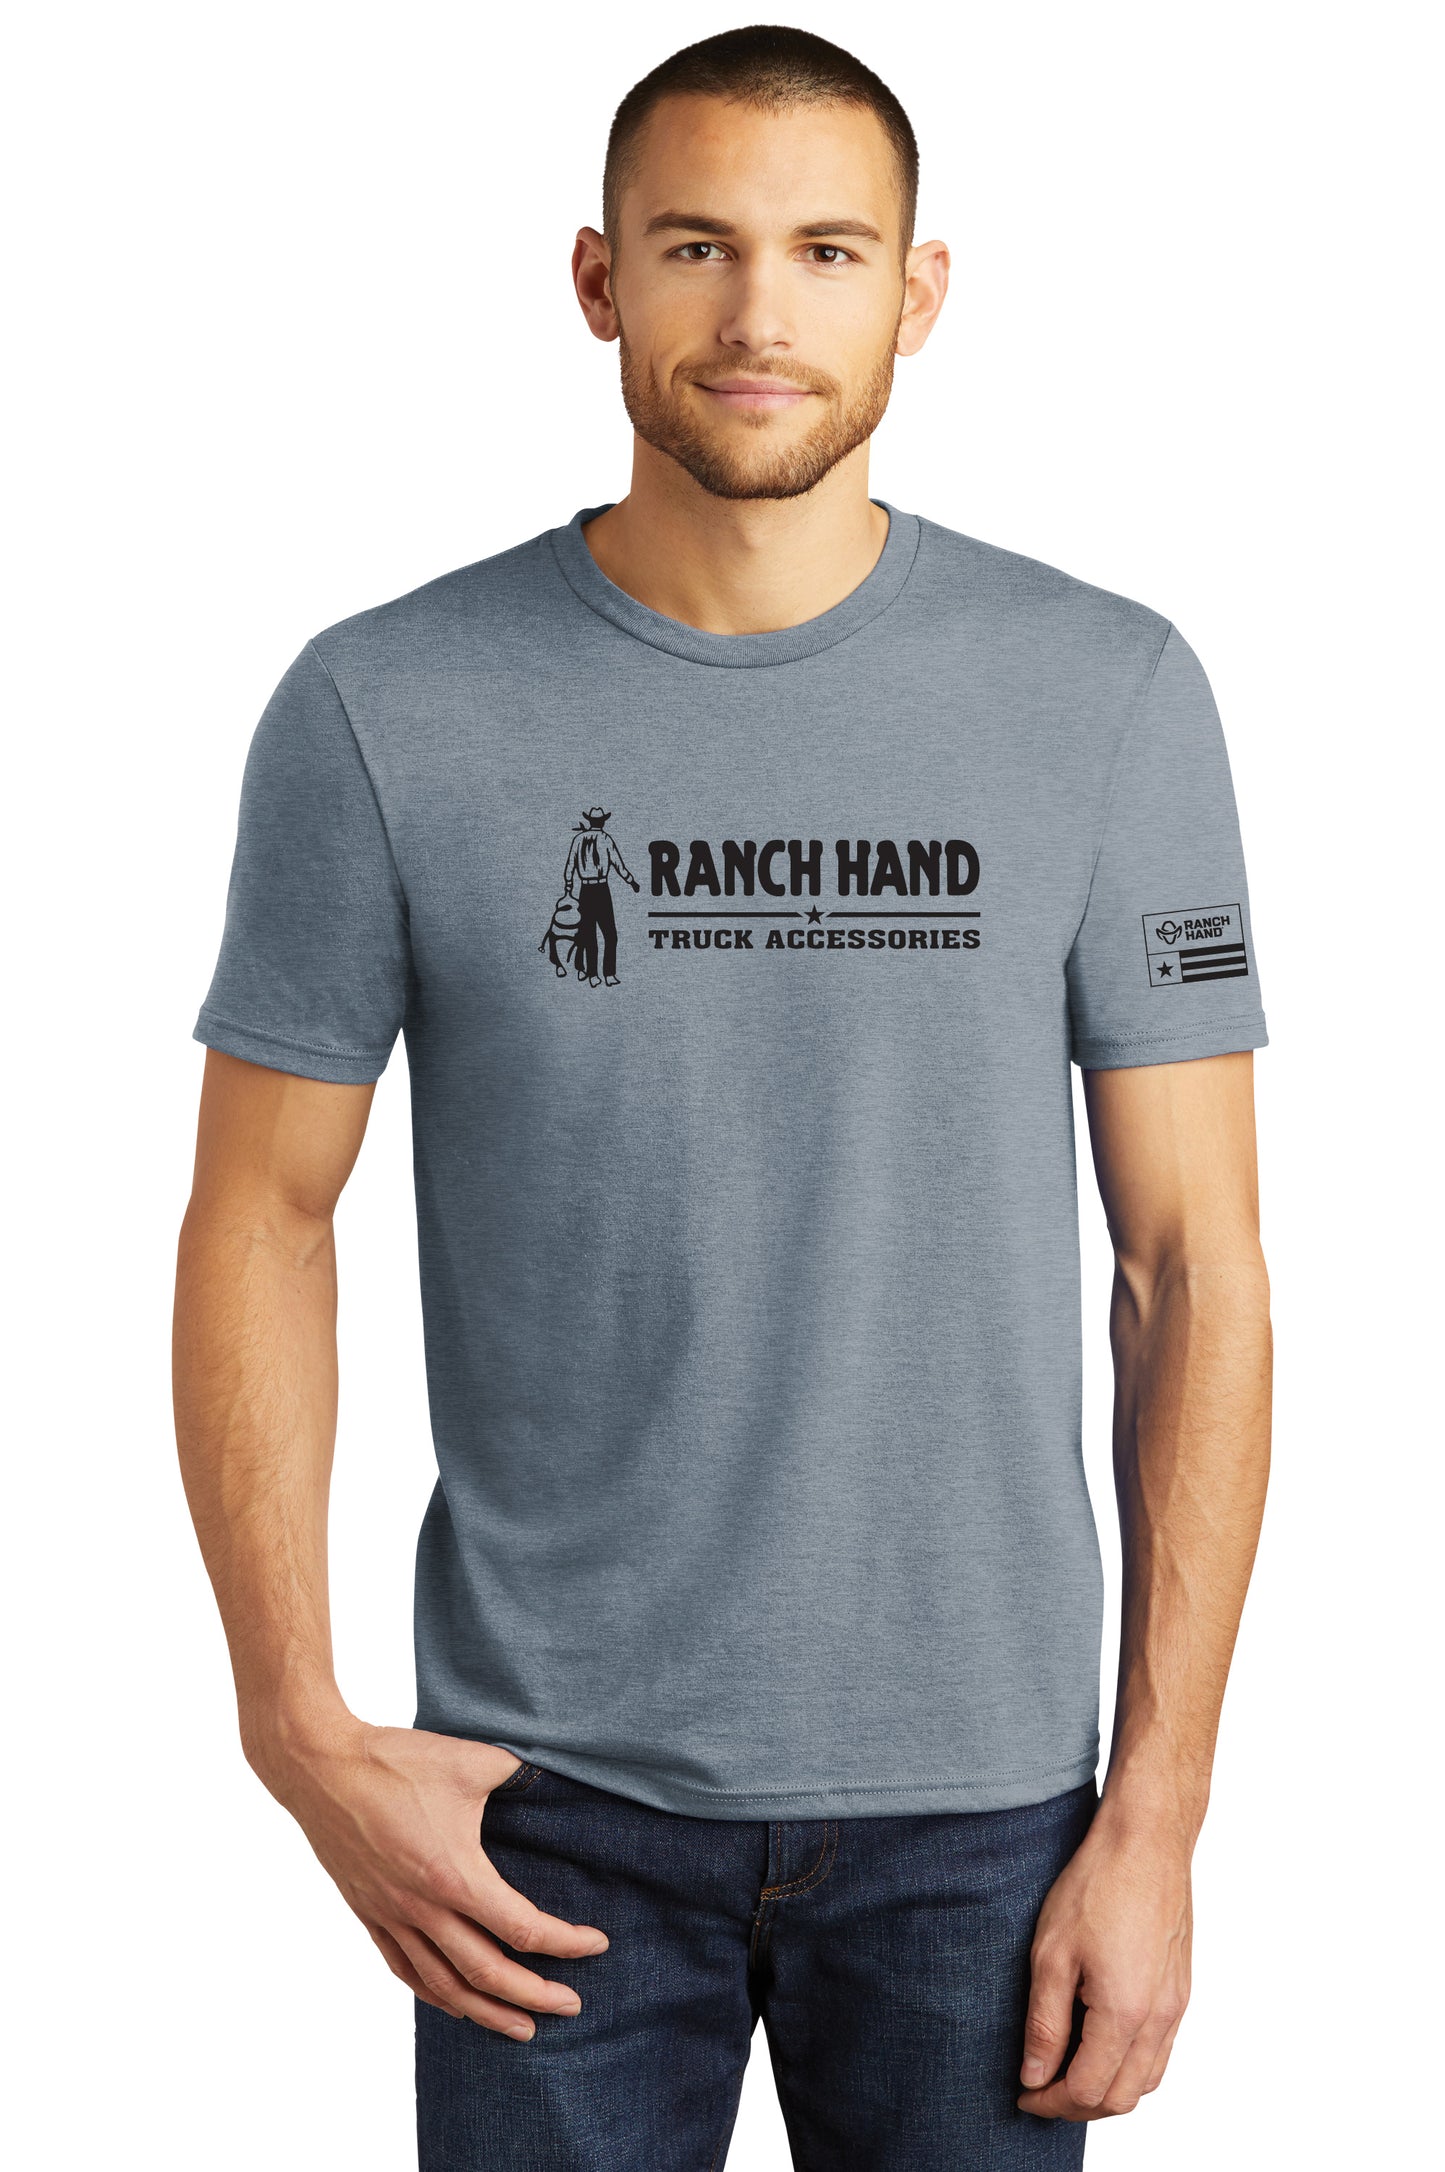 Ranch Hand Vintage Americana T-Shirt - Flint Blue